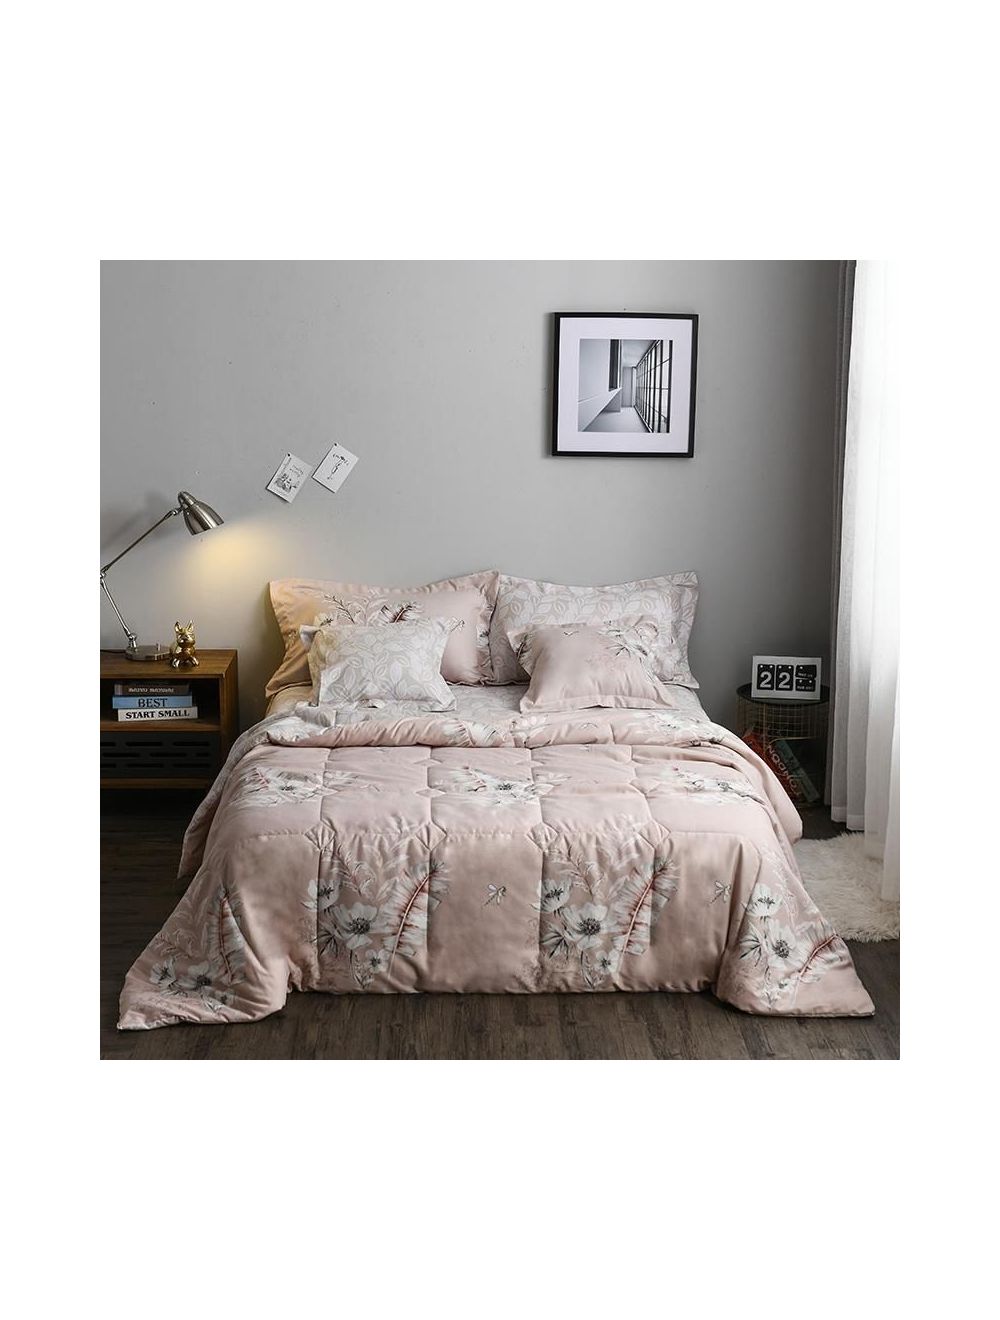 Rishahome 6 Piece Comforter Set (1 comforter+1 fitted sheet+ 2 Large pillow cases+2 medium pillow cases) Microfibre Damask Crème King-DCKMH/06/34